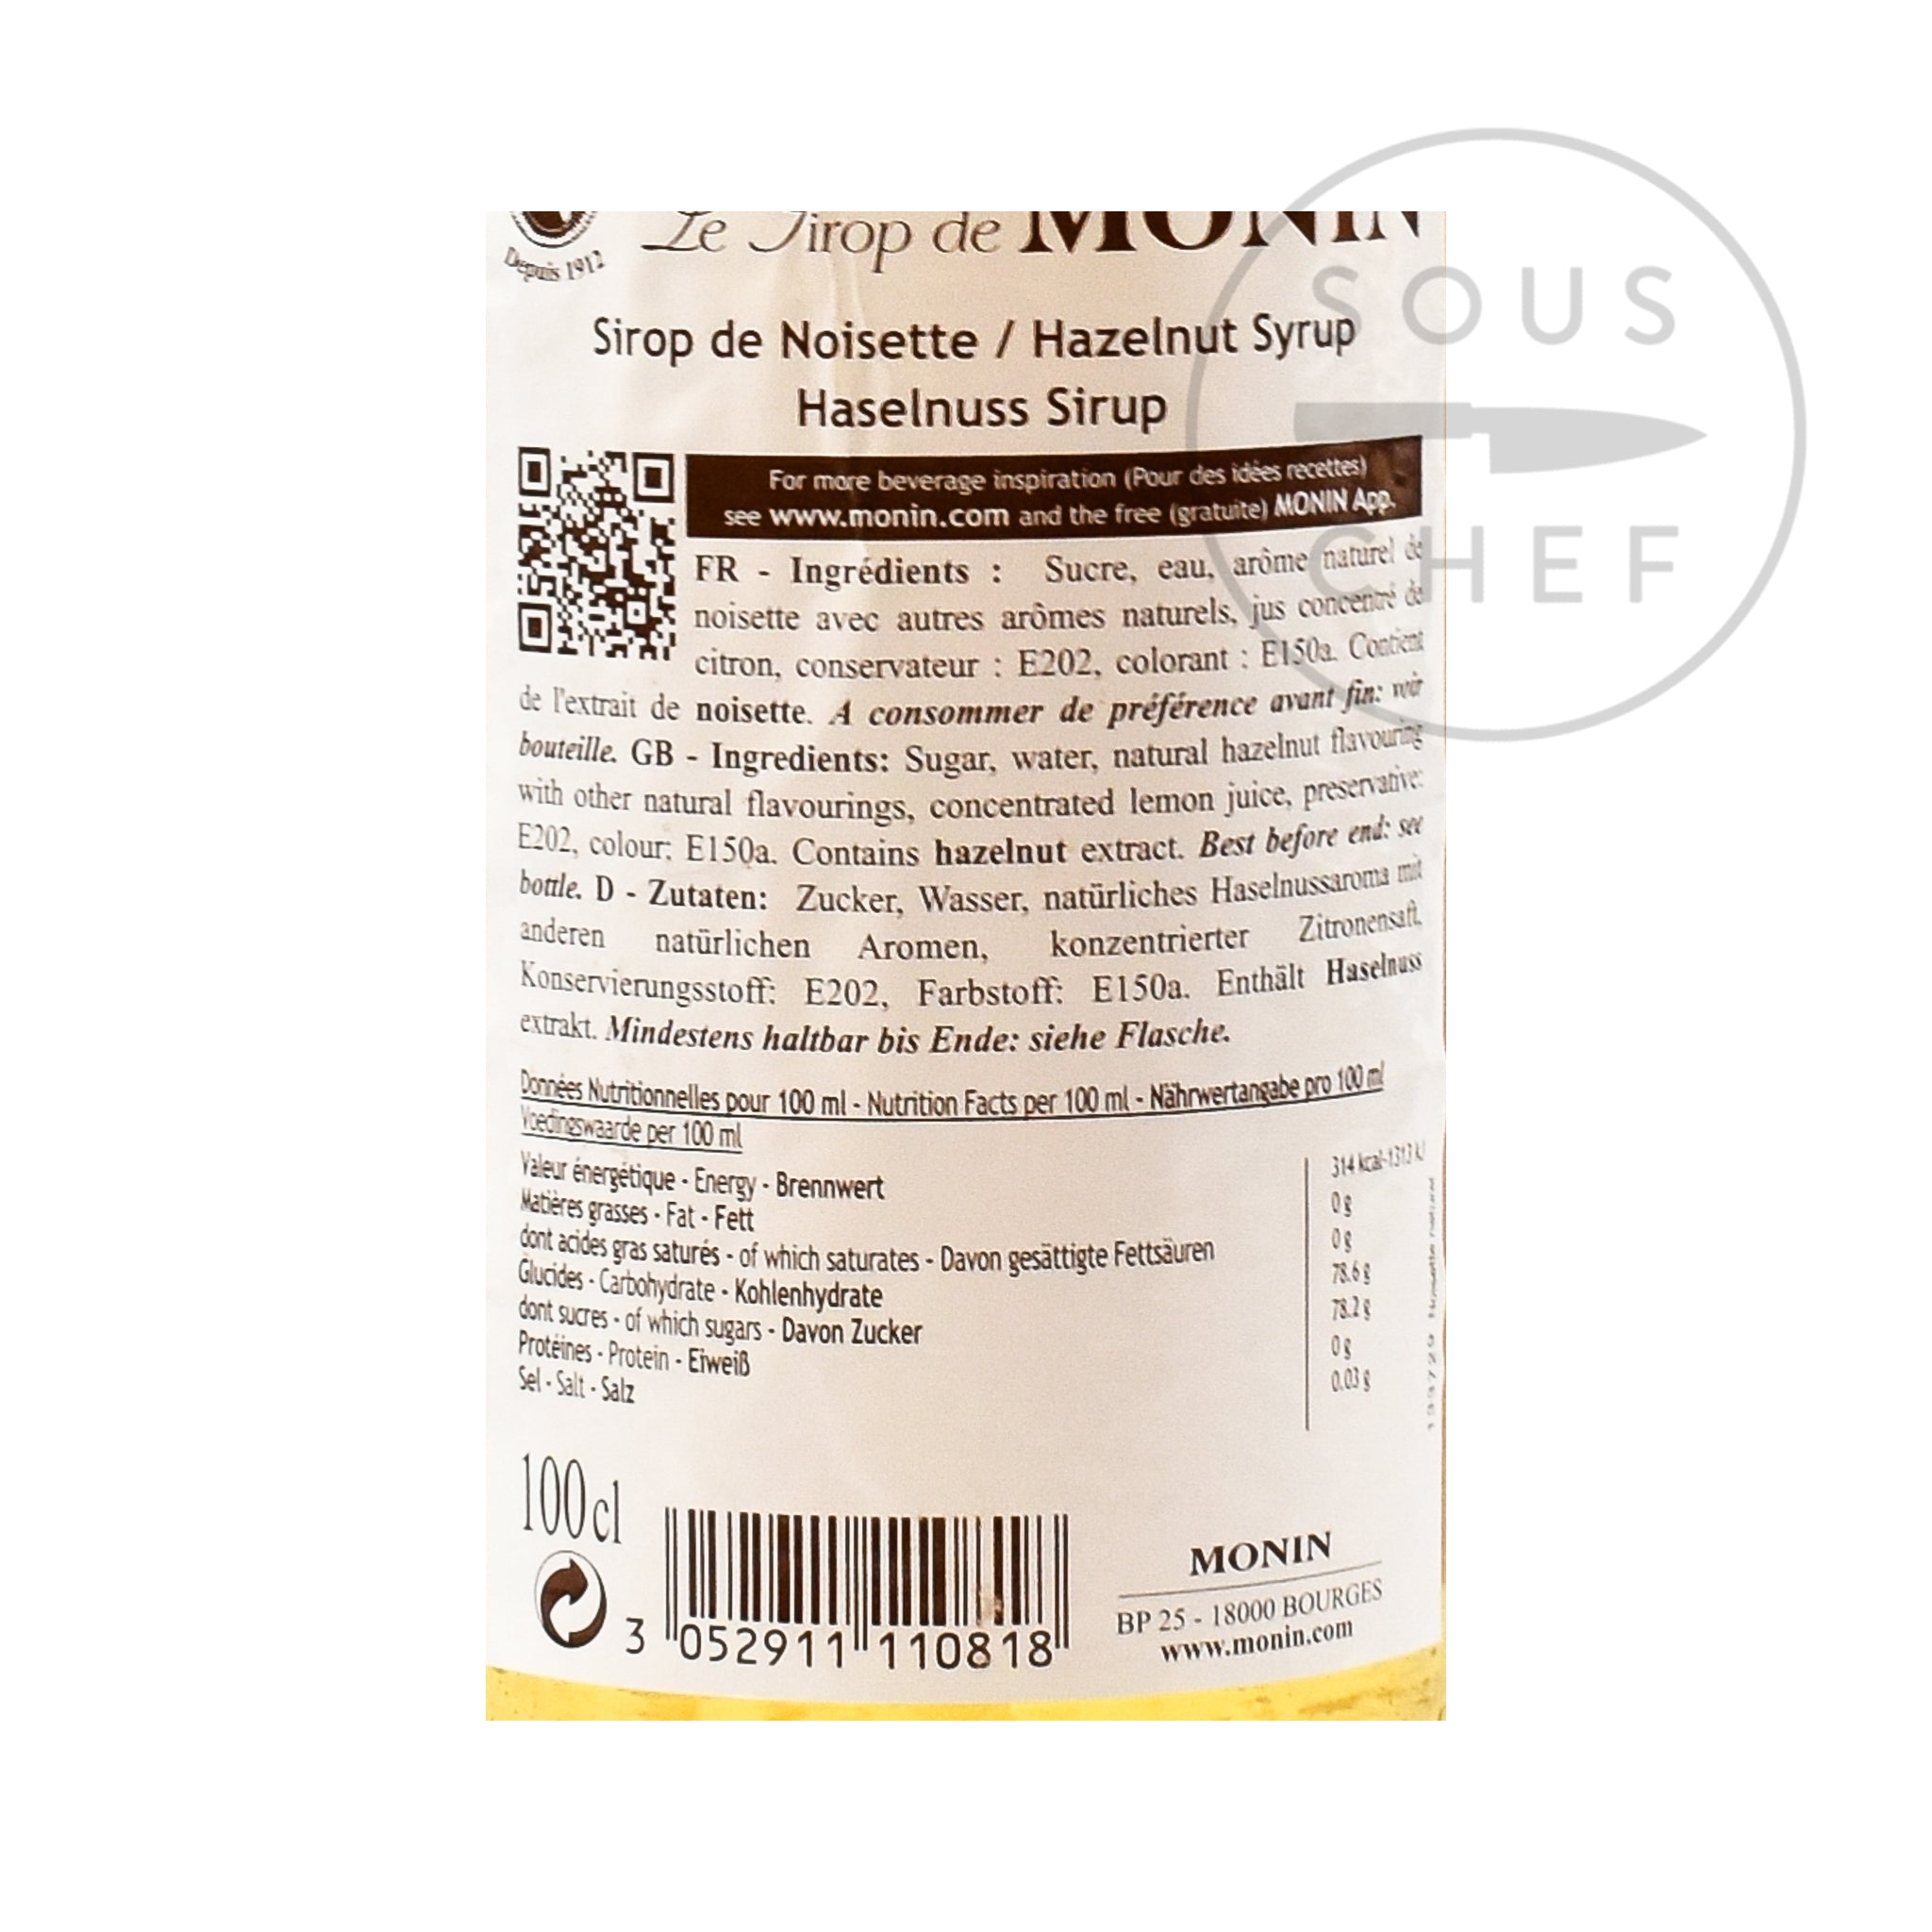 Monin Hazelnut Syrup 1 litre nutritional information ingredients